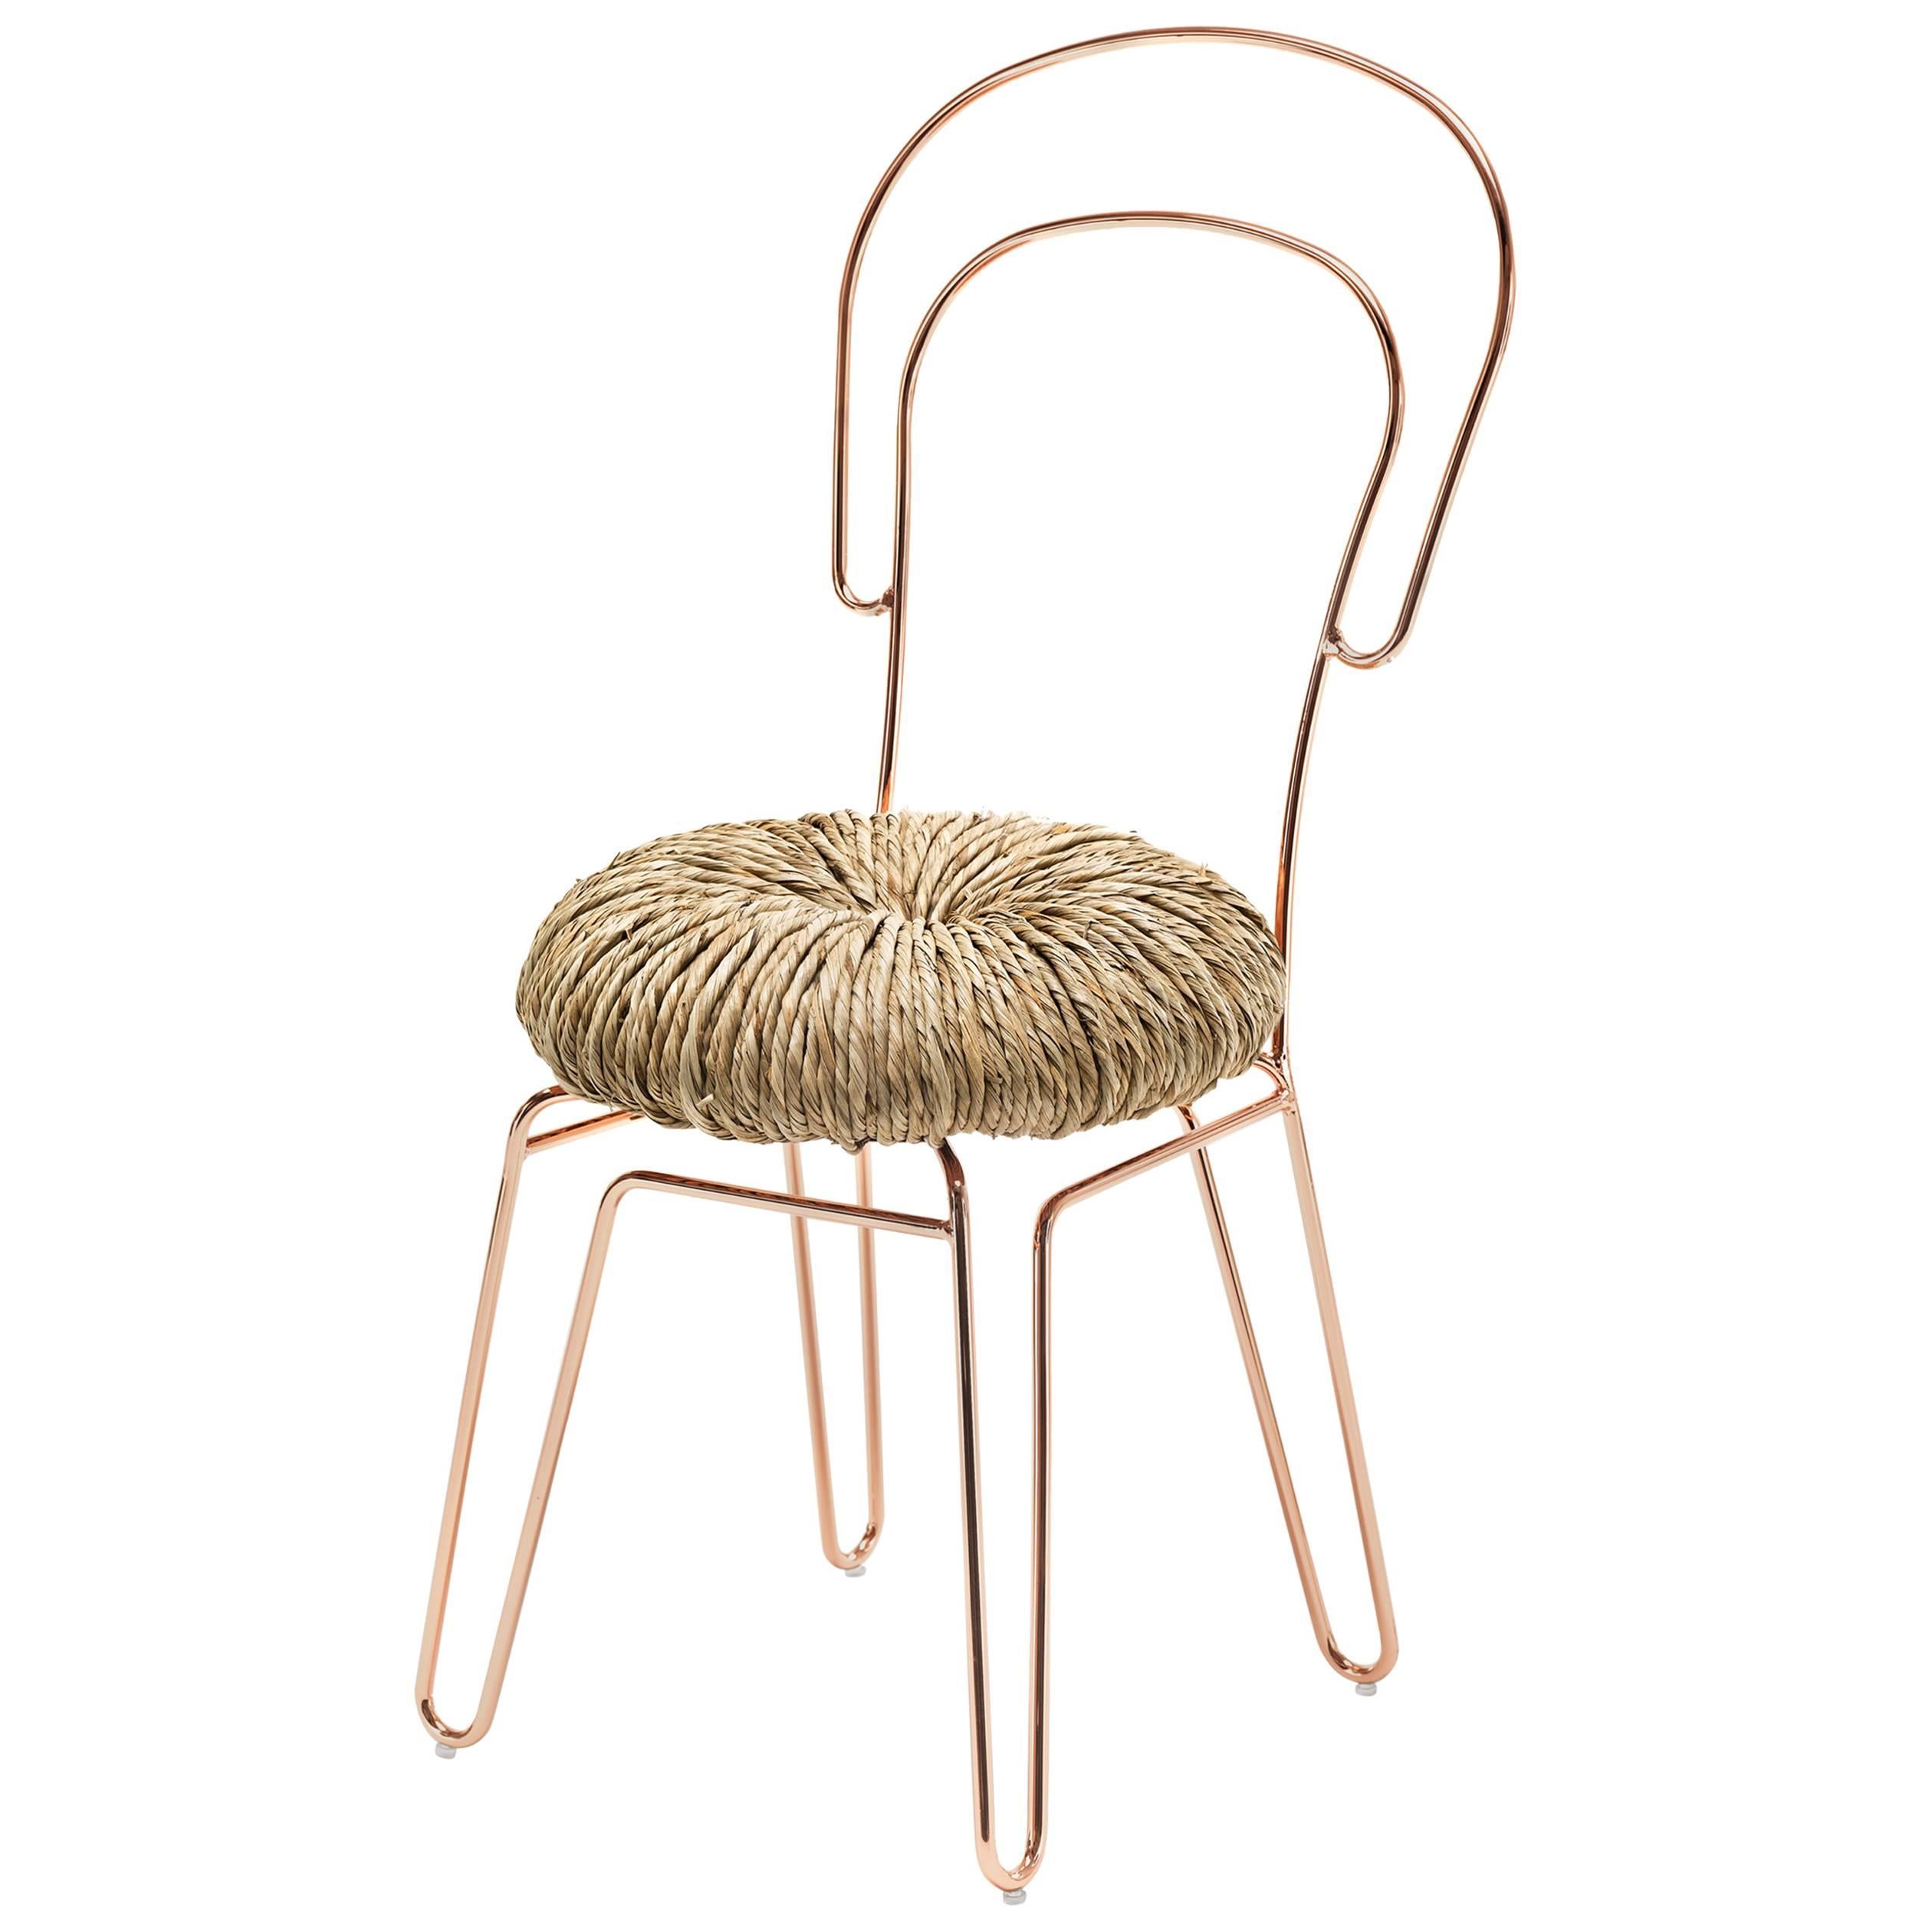 Donut Chair ‘Set of 2’ in Copper Finish by Alessandra Baldereschi & Mogg